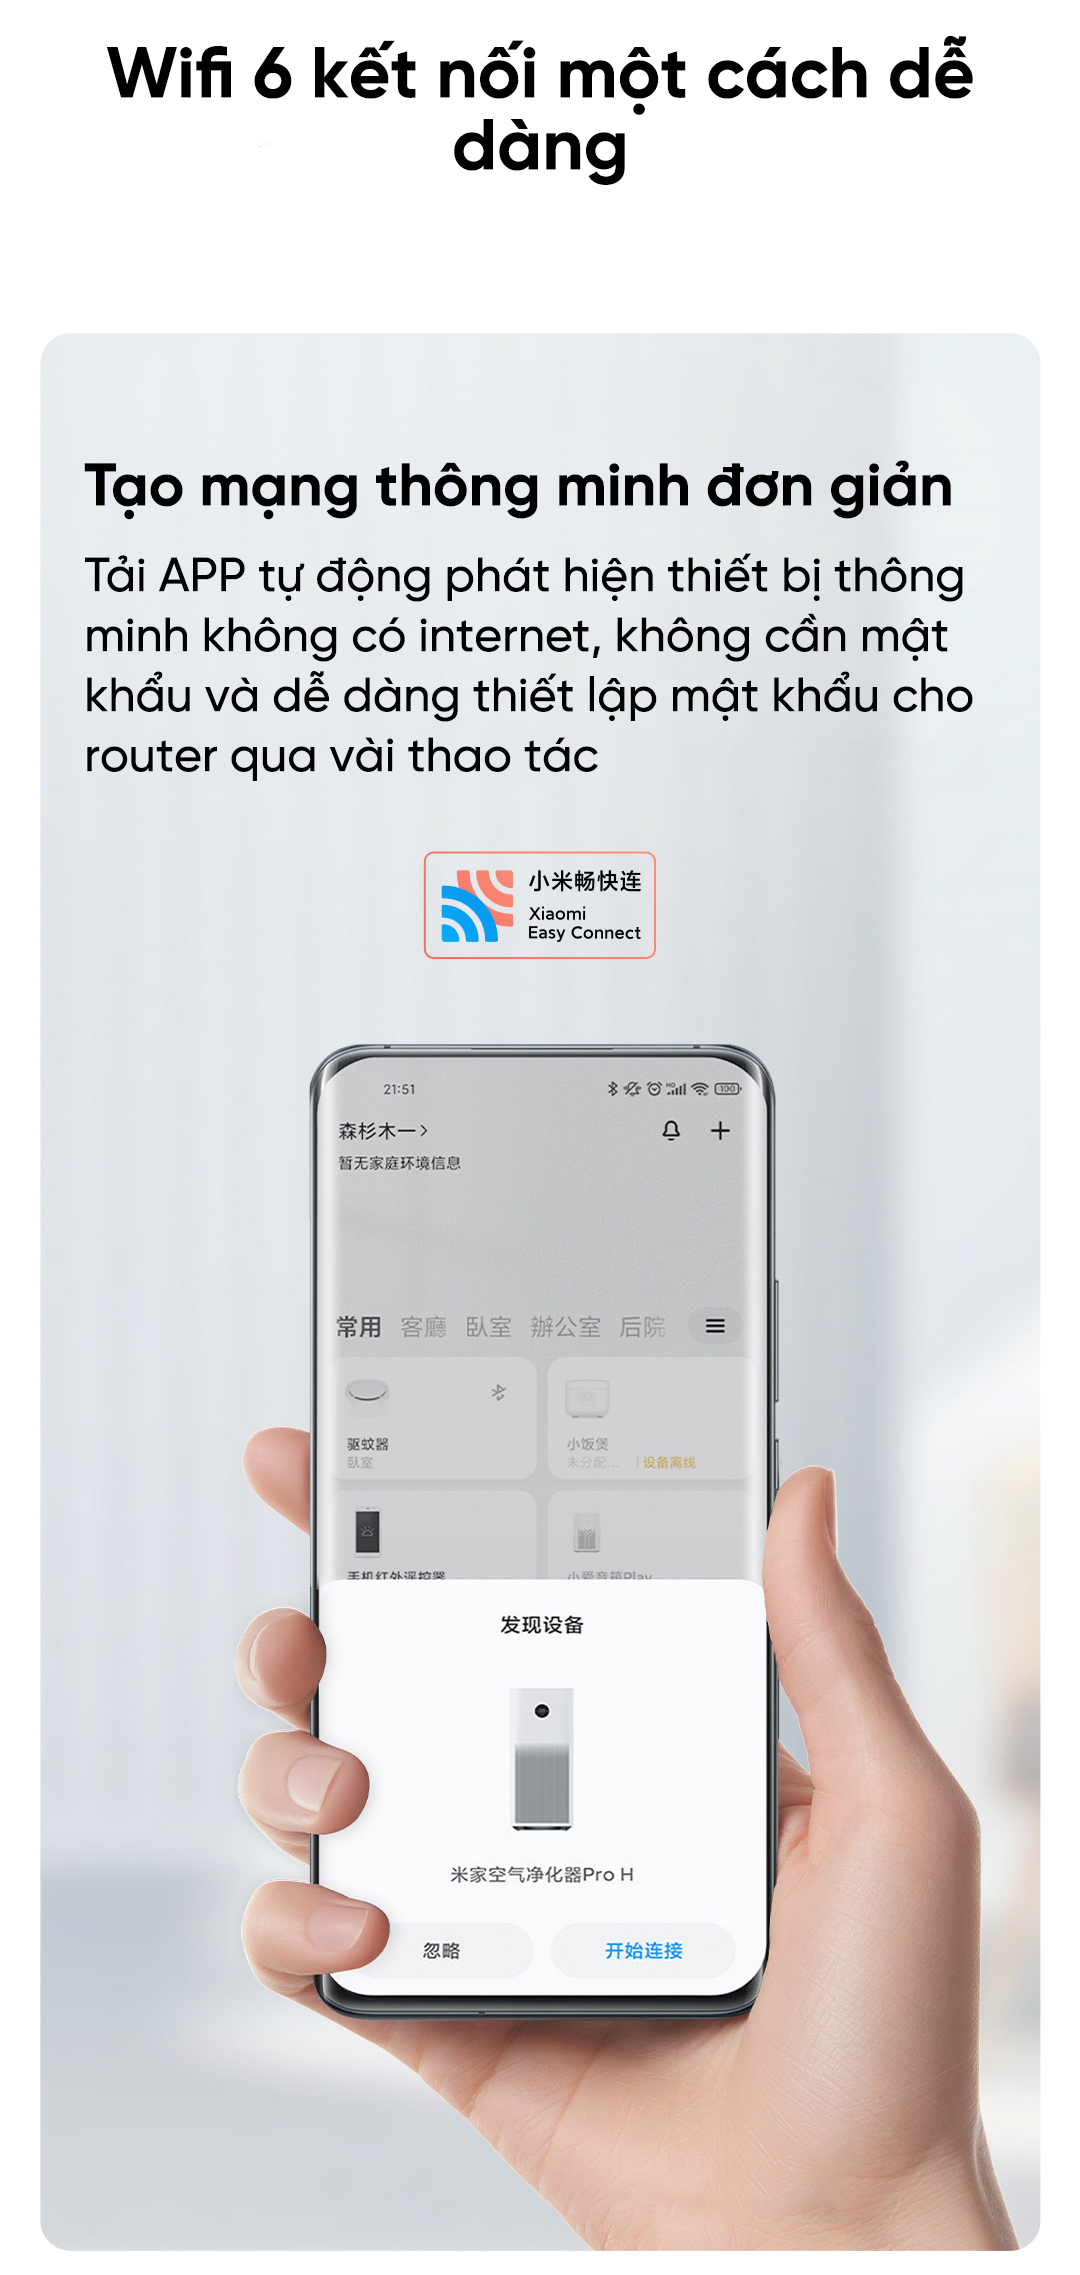 Bộ định tuyến router wifi 6 Xiaomi Redmi AX3000